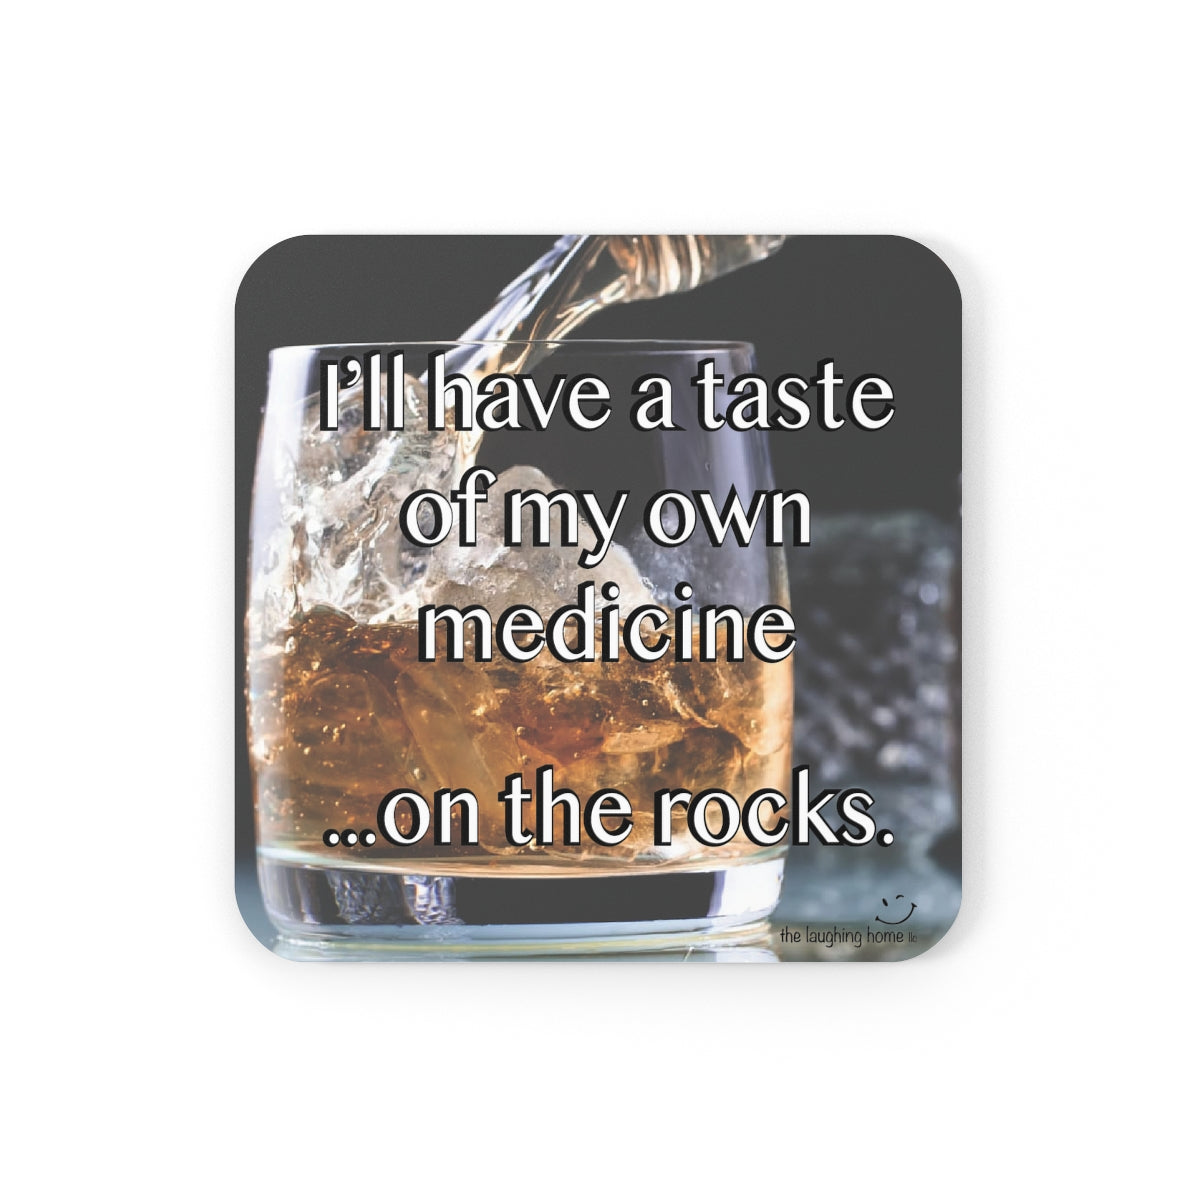 A taste of my own medicine on the rocks Corkwood Coaster Set of 4